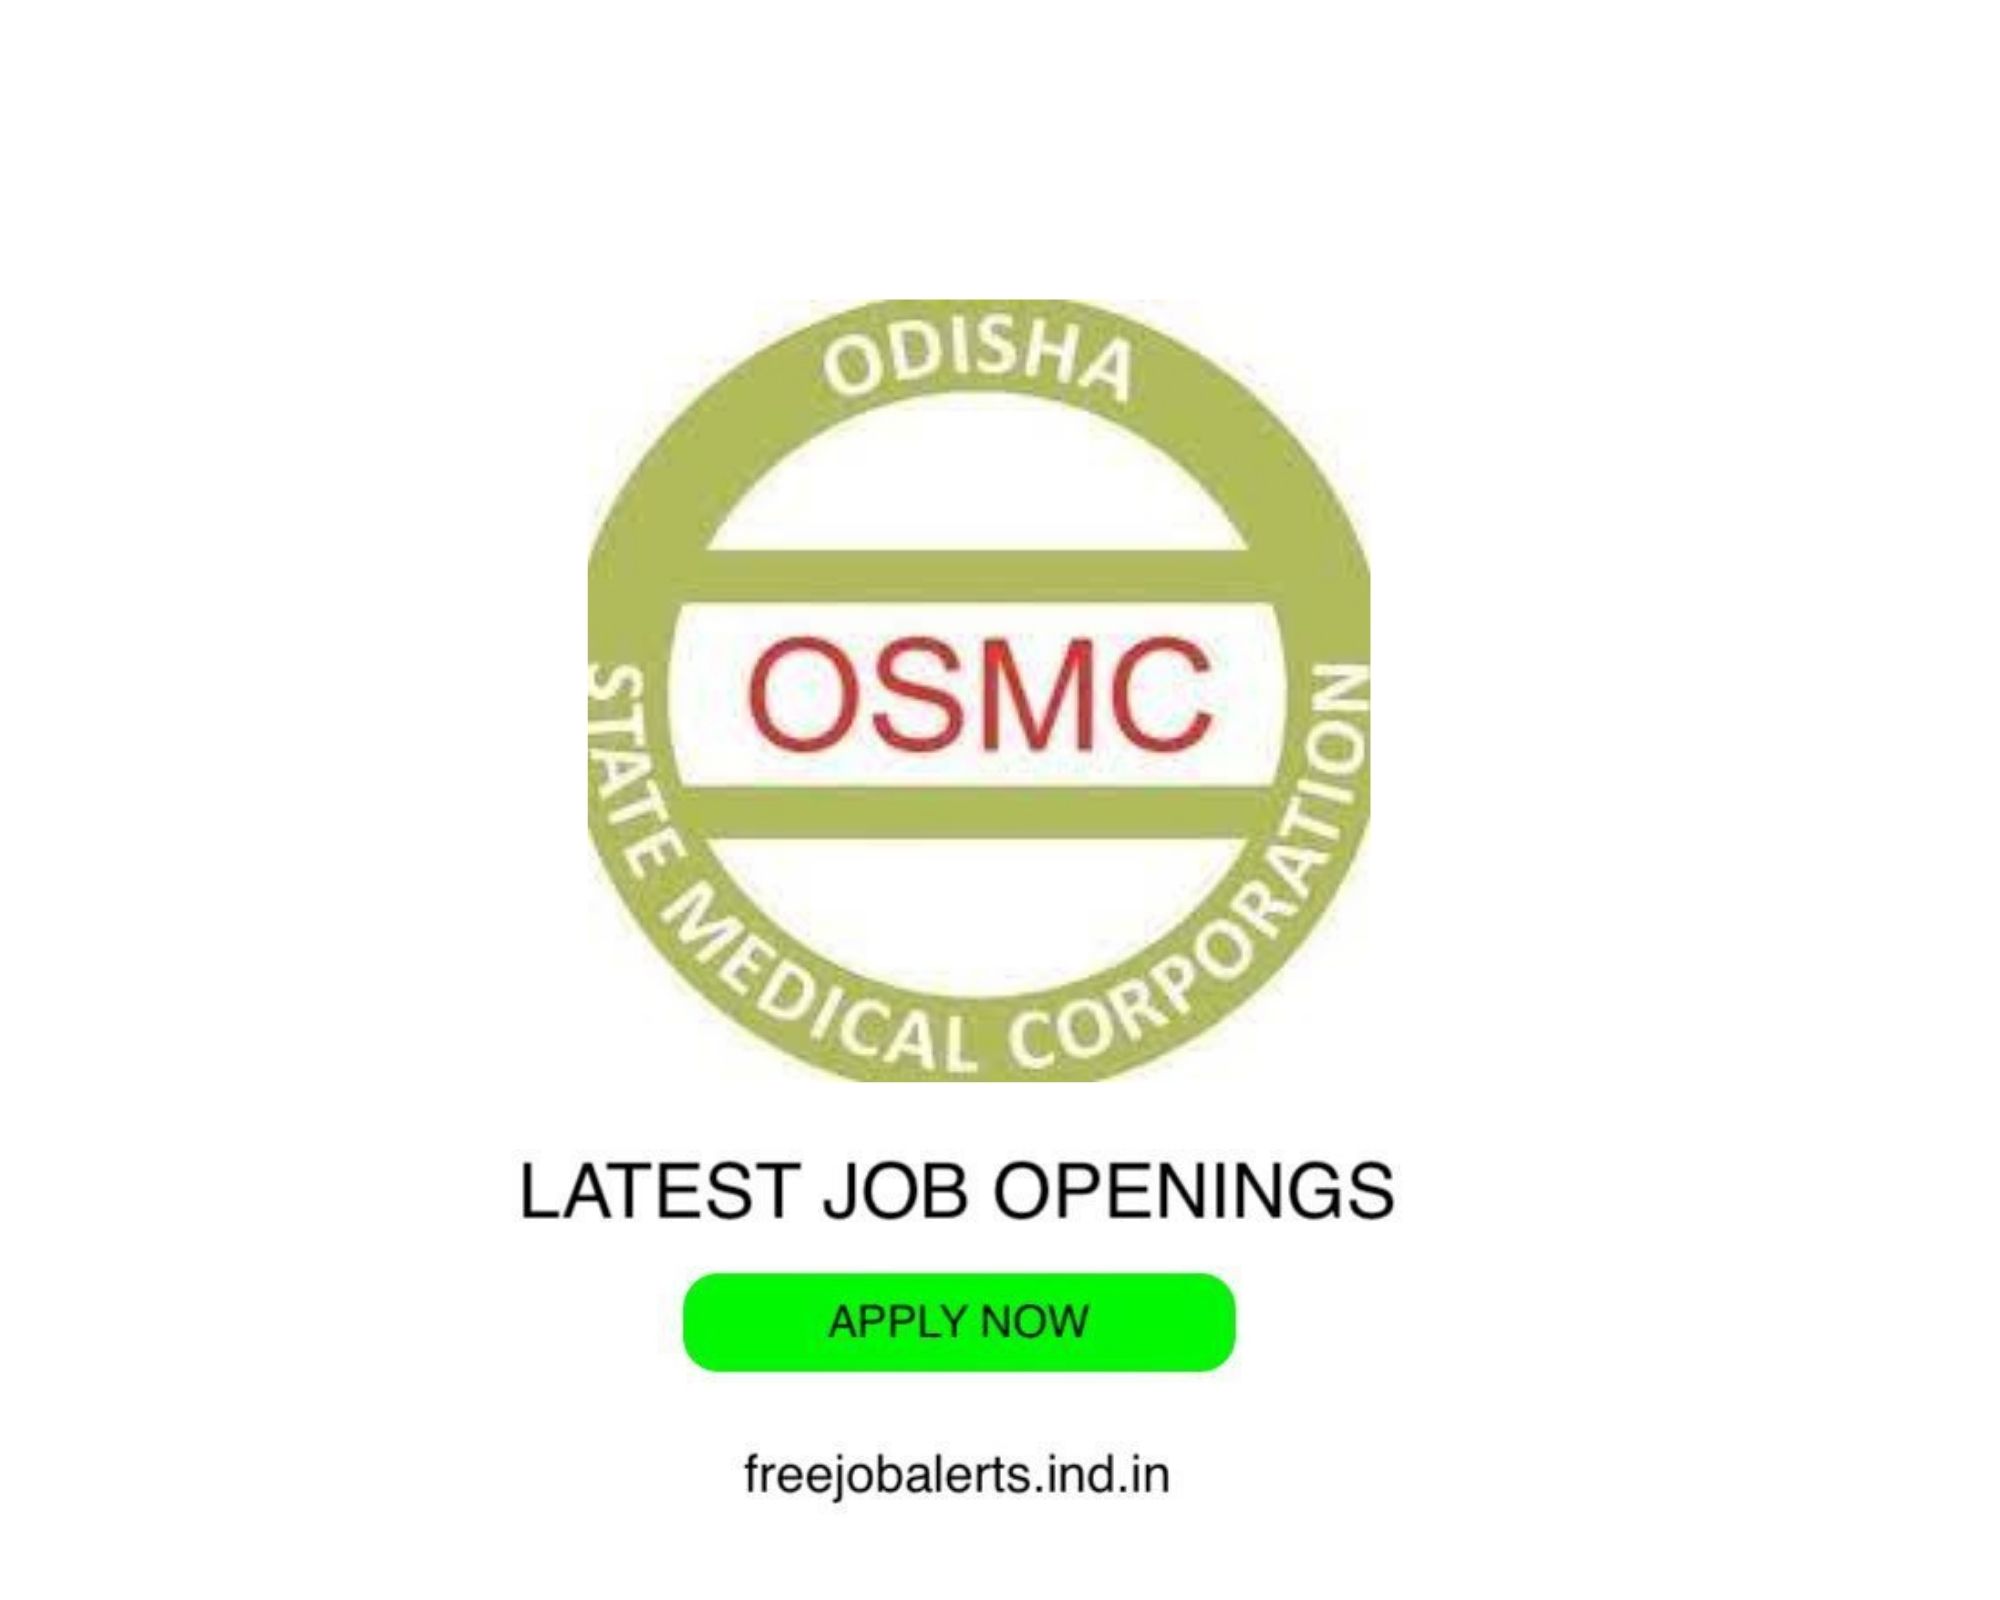 OSMC- odisha state medical corporation- Latest Govt job openings - Free job alerts, Indian Govt Jobs - Free job alerts, Indian Govt Jobs - Free Job Alert